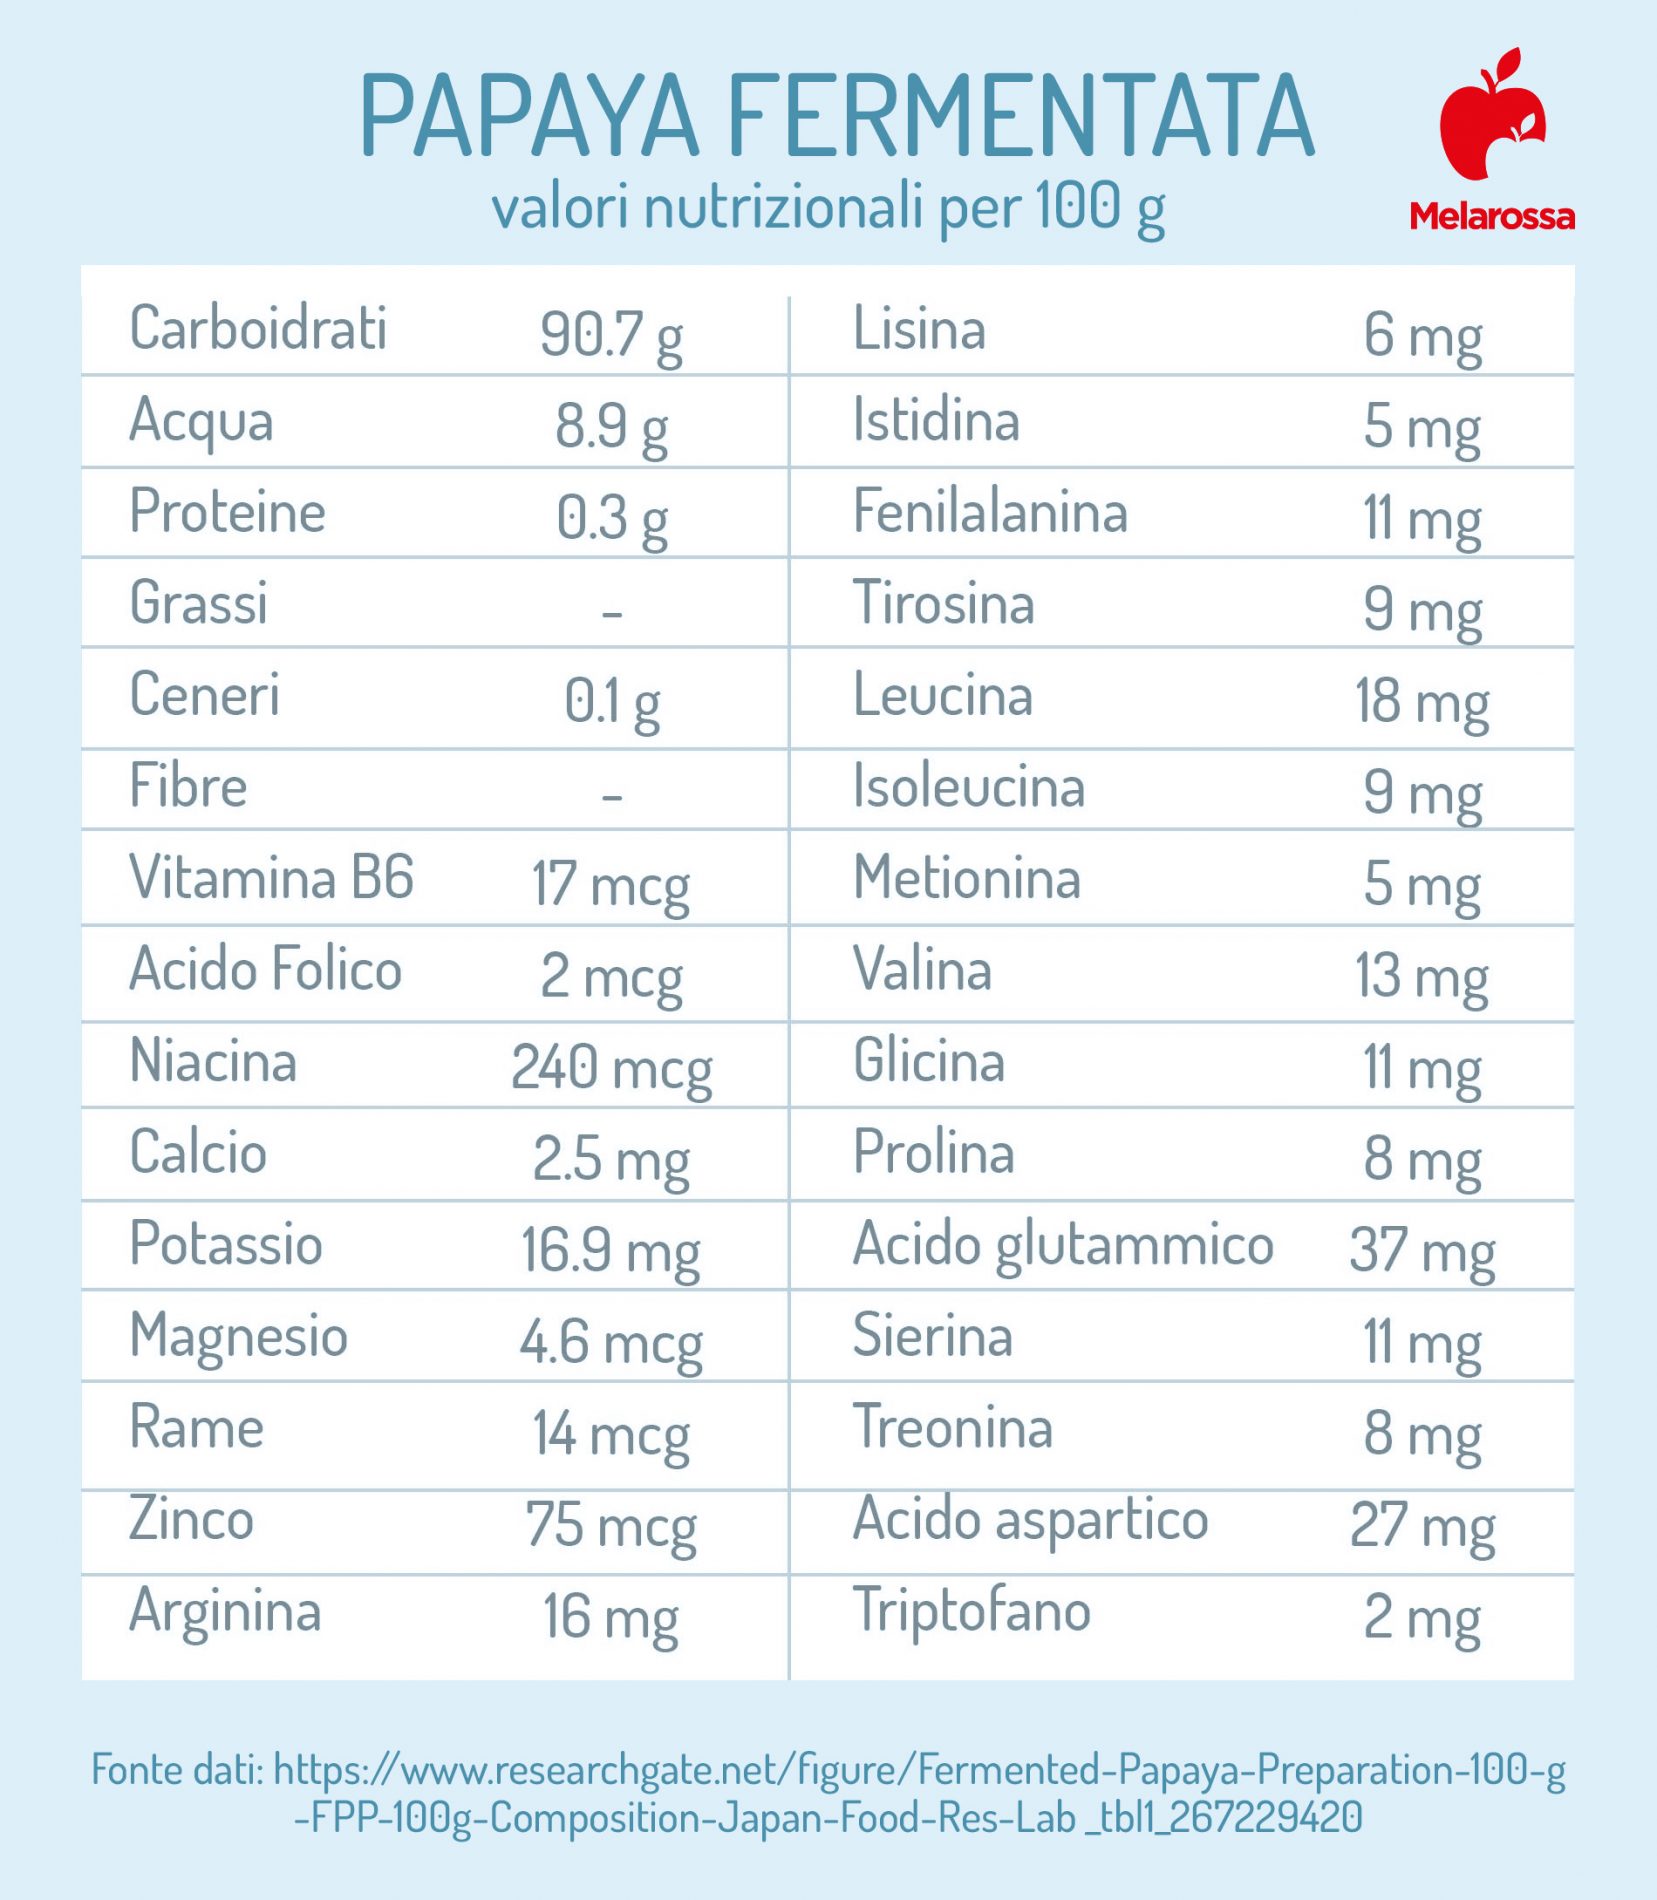 papaya fermentata: proprietà e valori nutrizionali